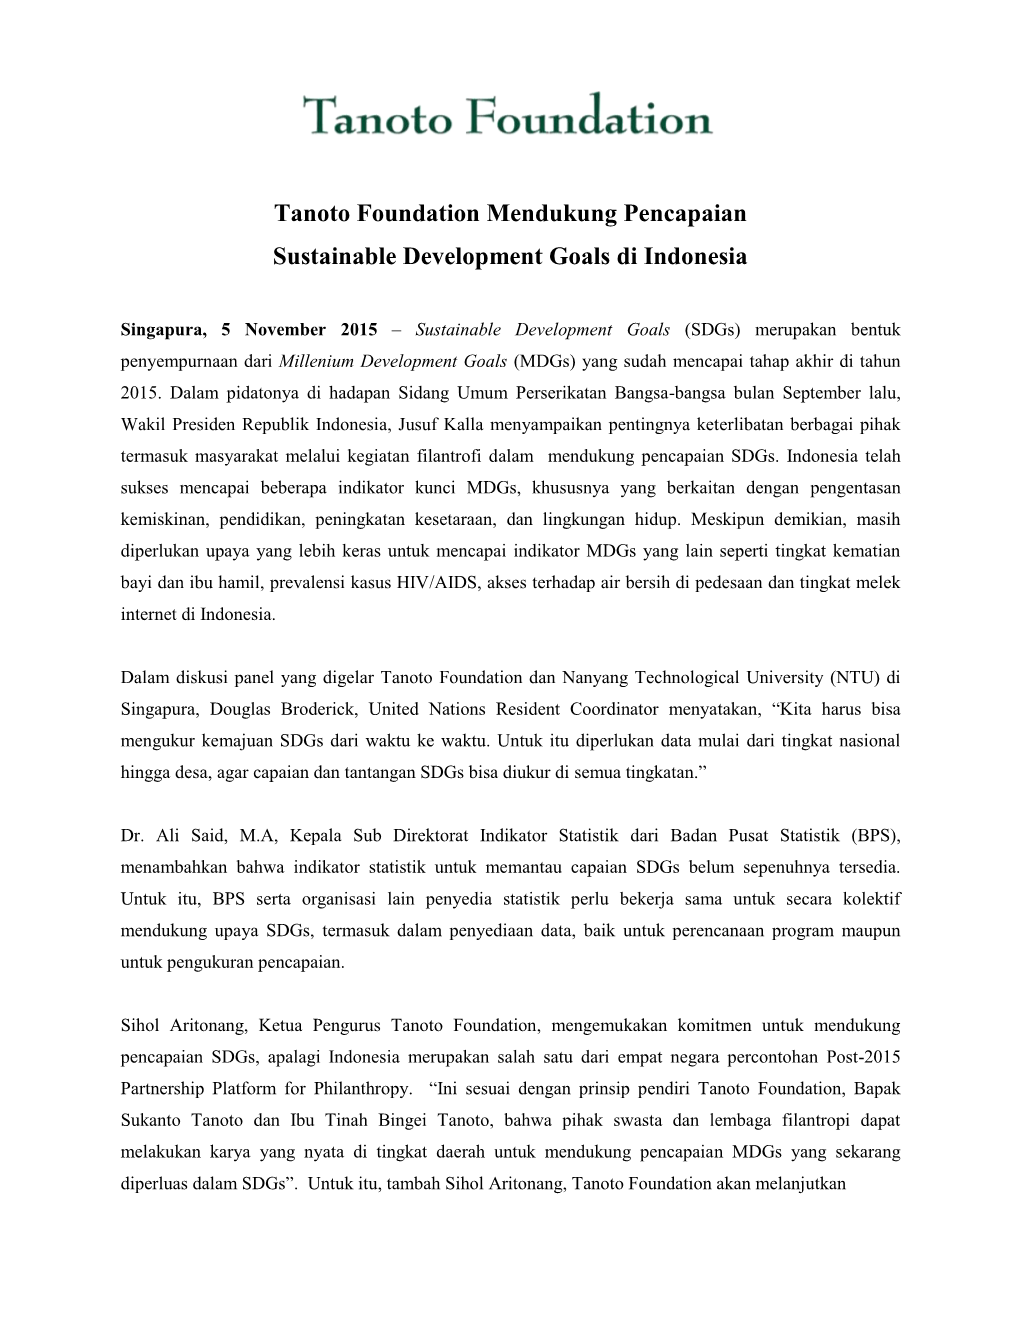 Tanoto Foundation Mendukung Pencapaian Sustainable Development Goals Di Indonesia